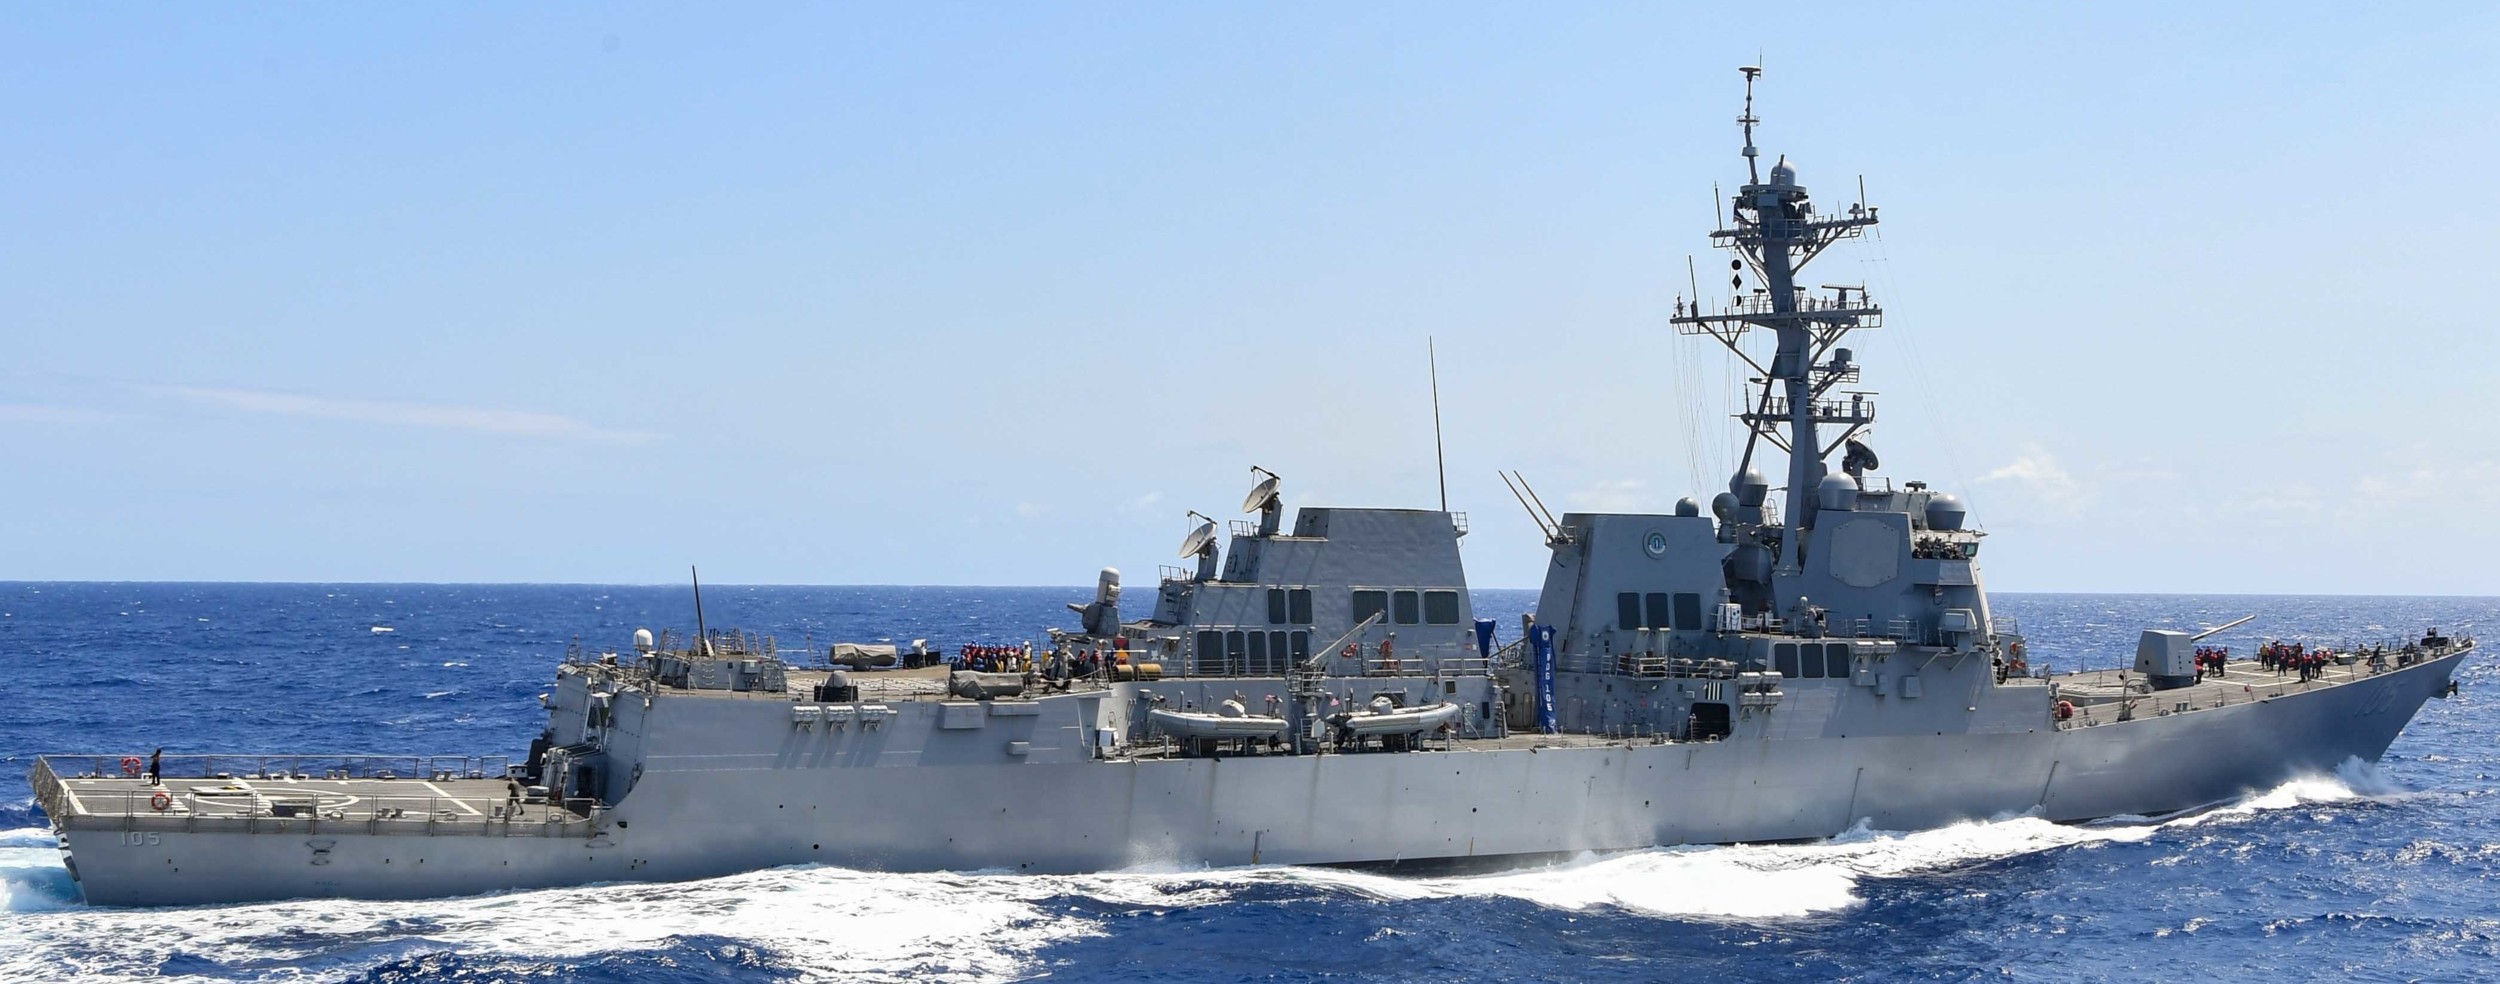 ddg-110 uss dewey arleigh burke class guided missile destroyer aegis us navy rimpac 2020 117